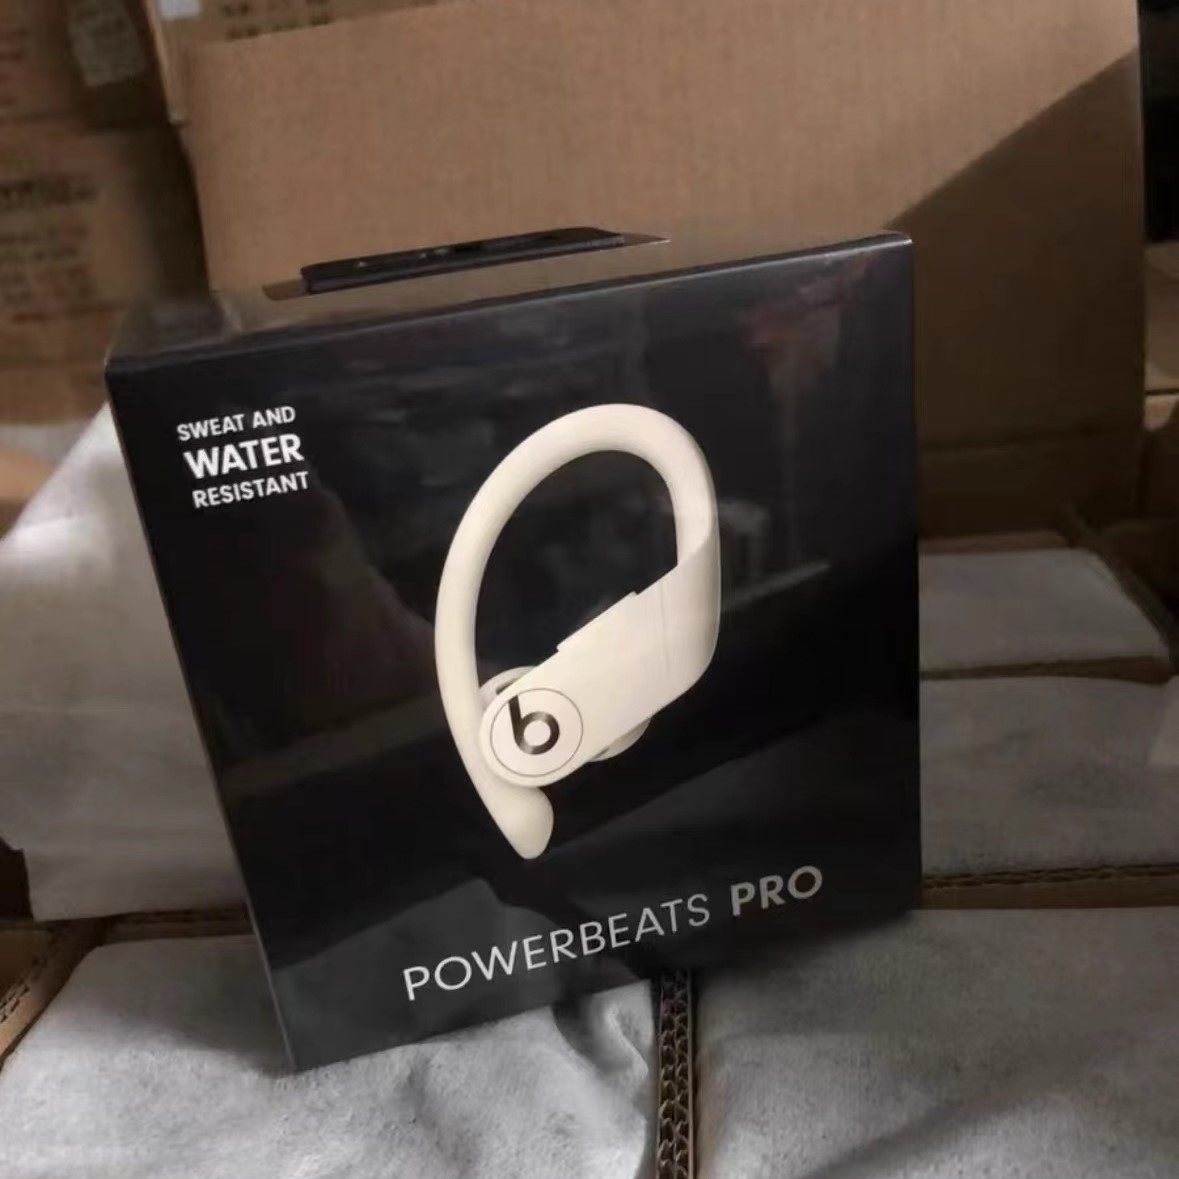 PowerbeatsPro wireless